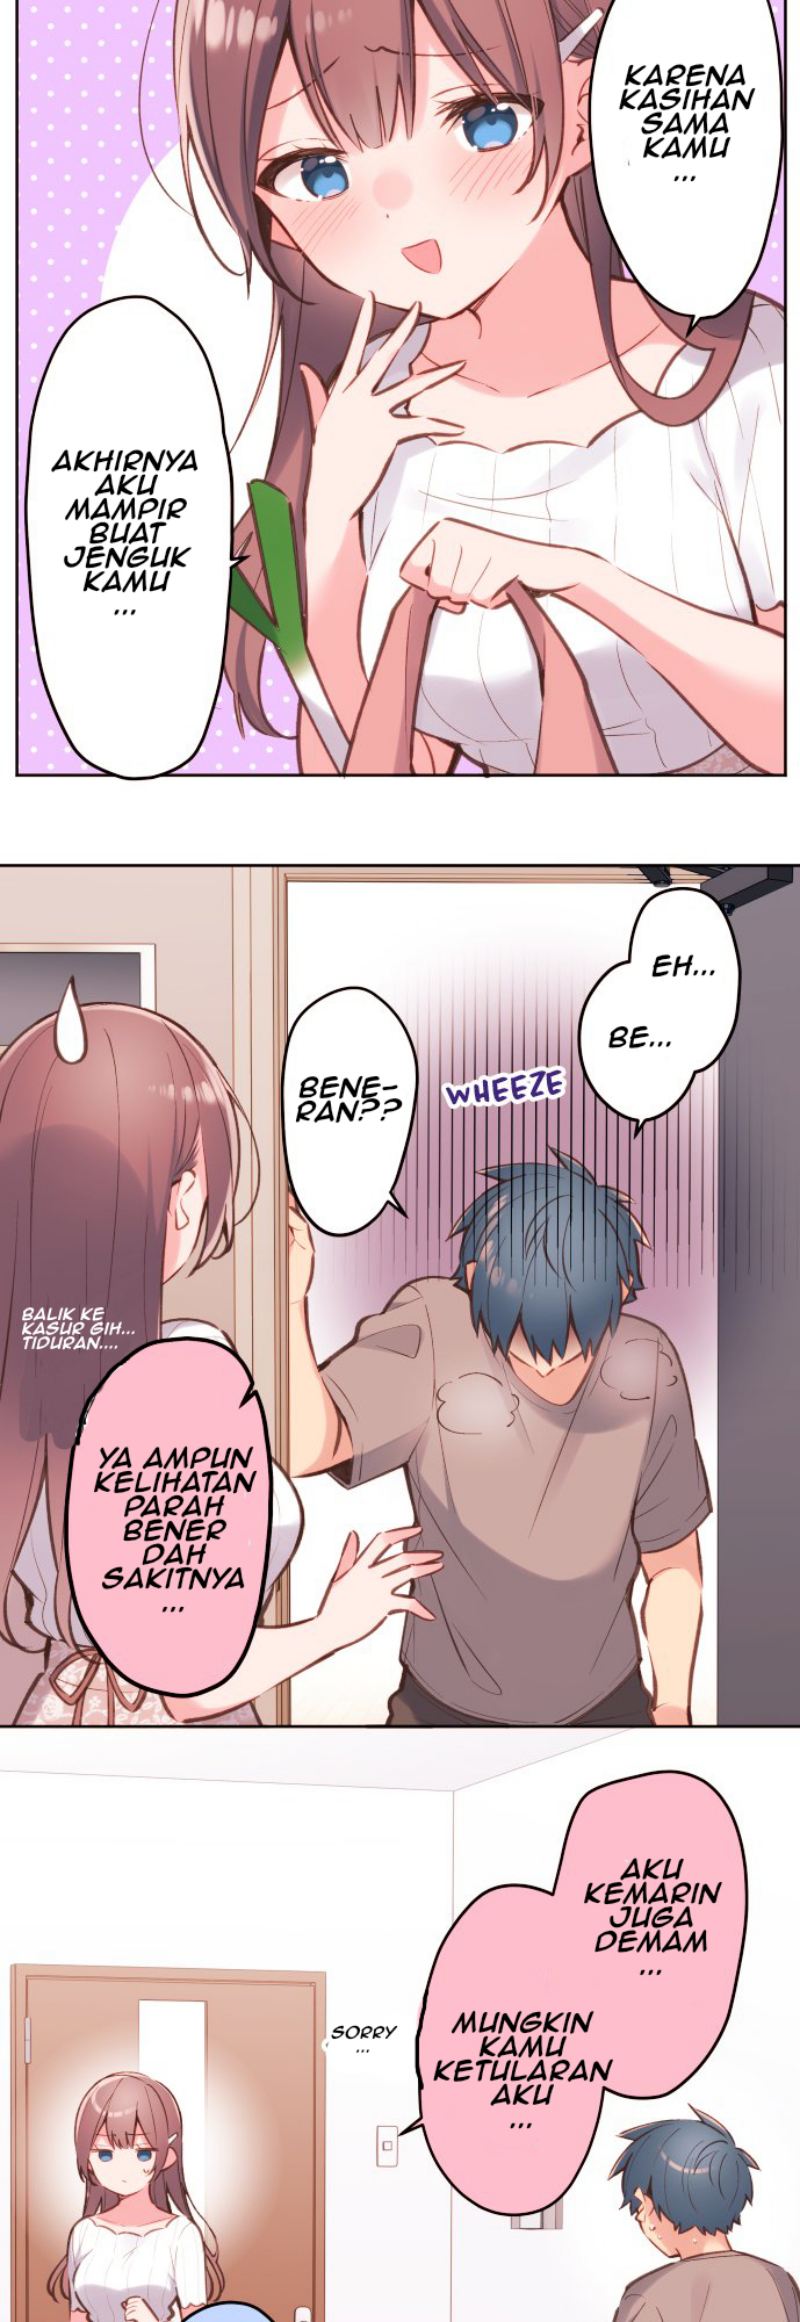 Waka-chan Is Flirty Again Chapter 40 12